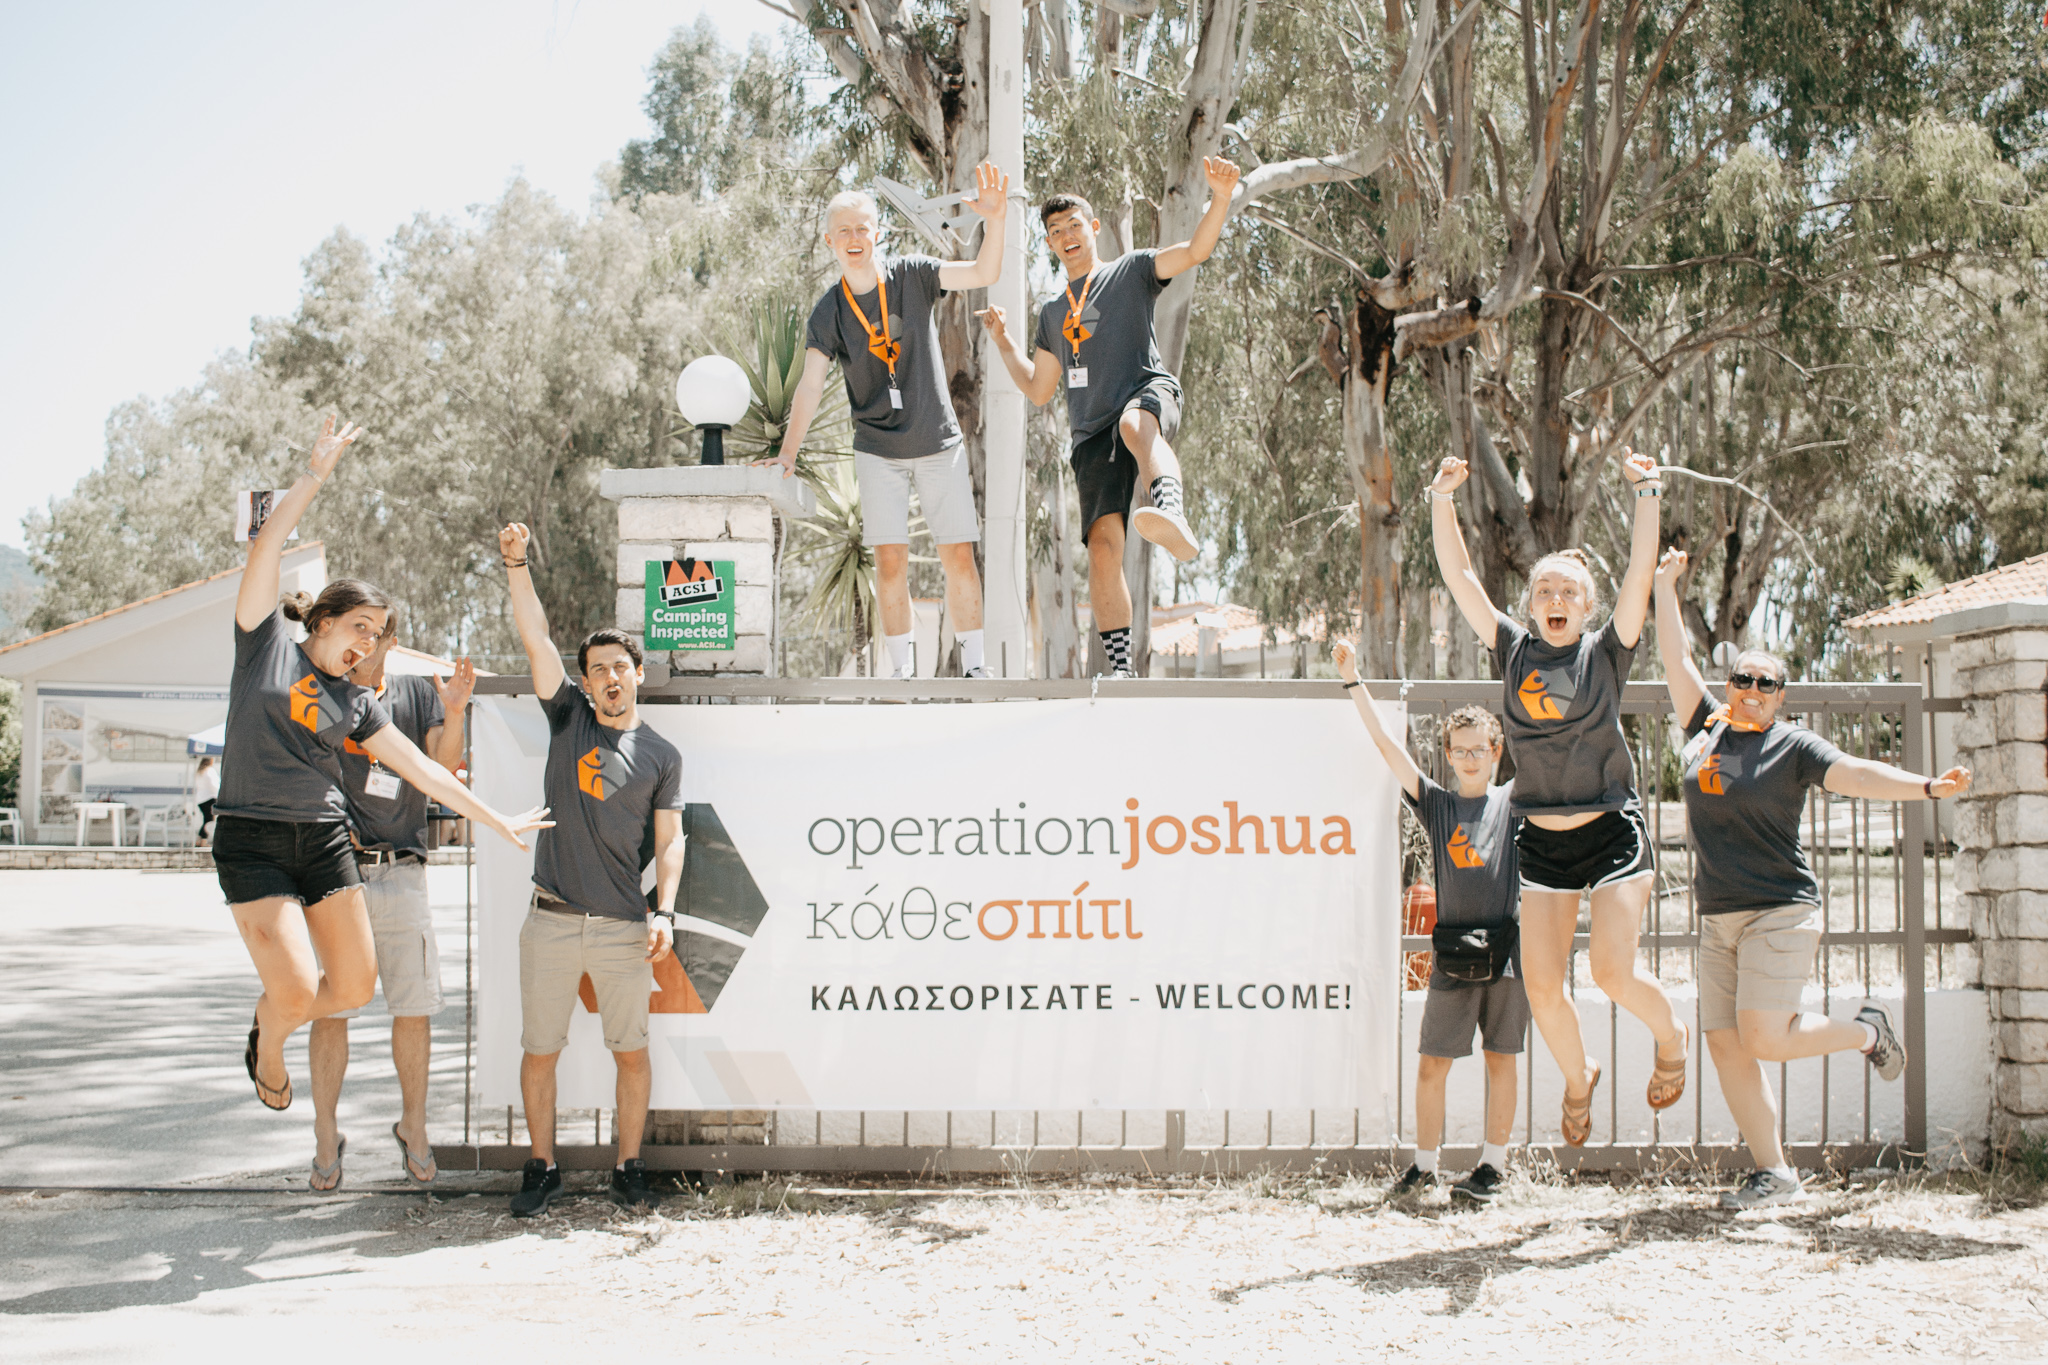 welcome to Operation Joshua!